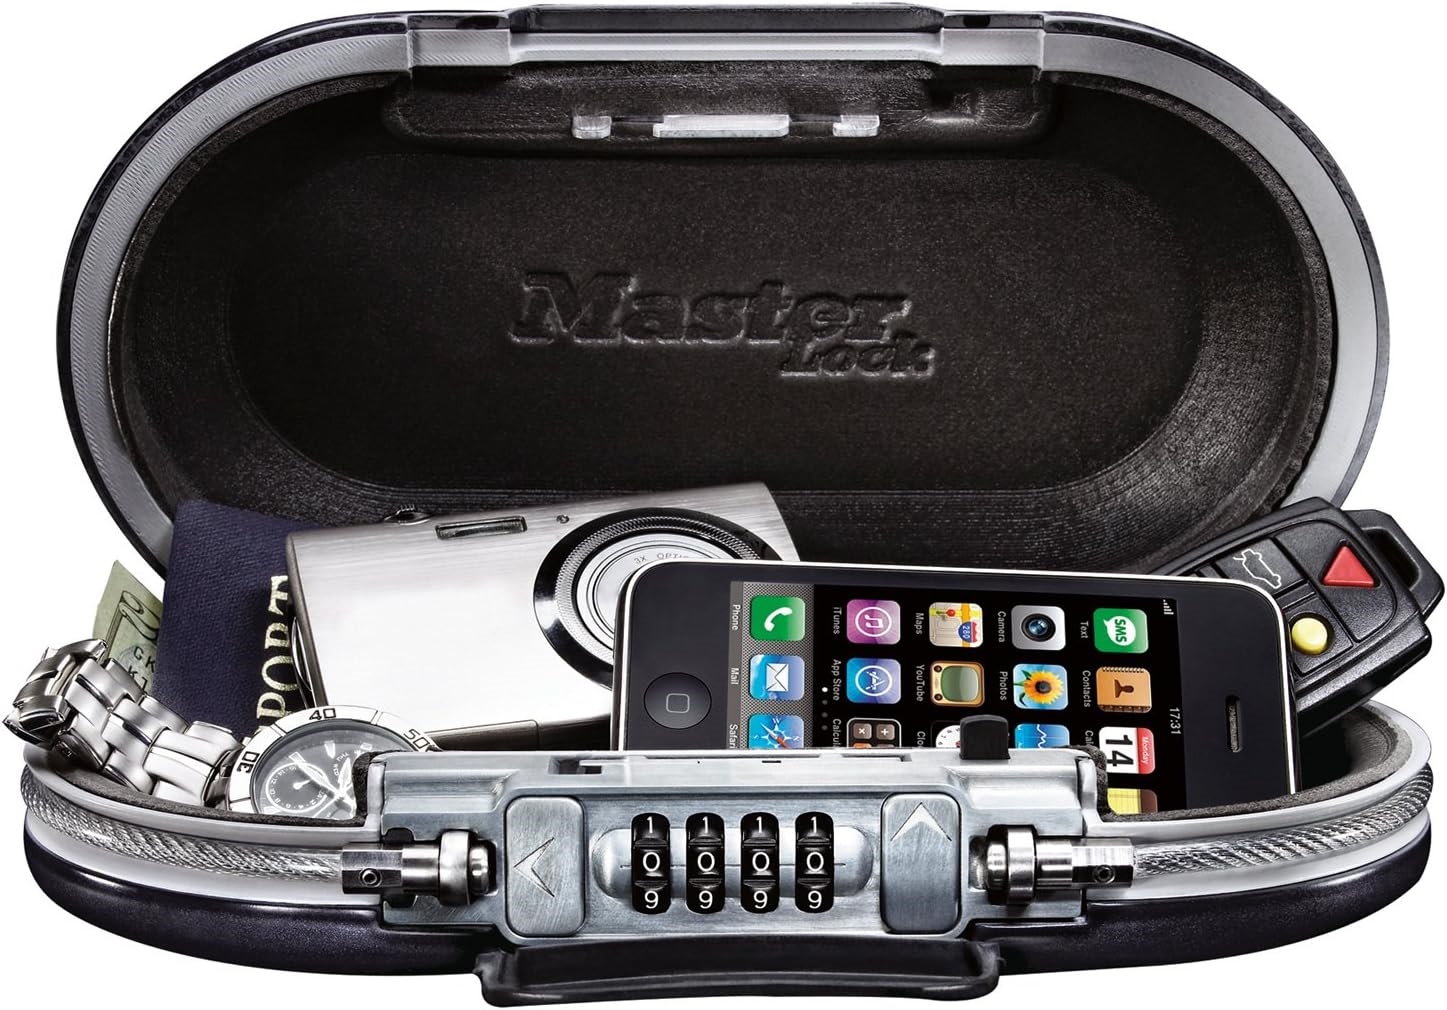 Master Lock Portable Jewelry Safe Box | DeviceDaily.com